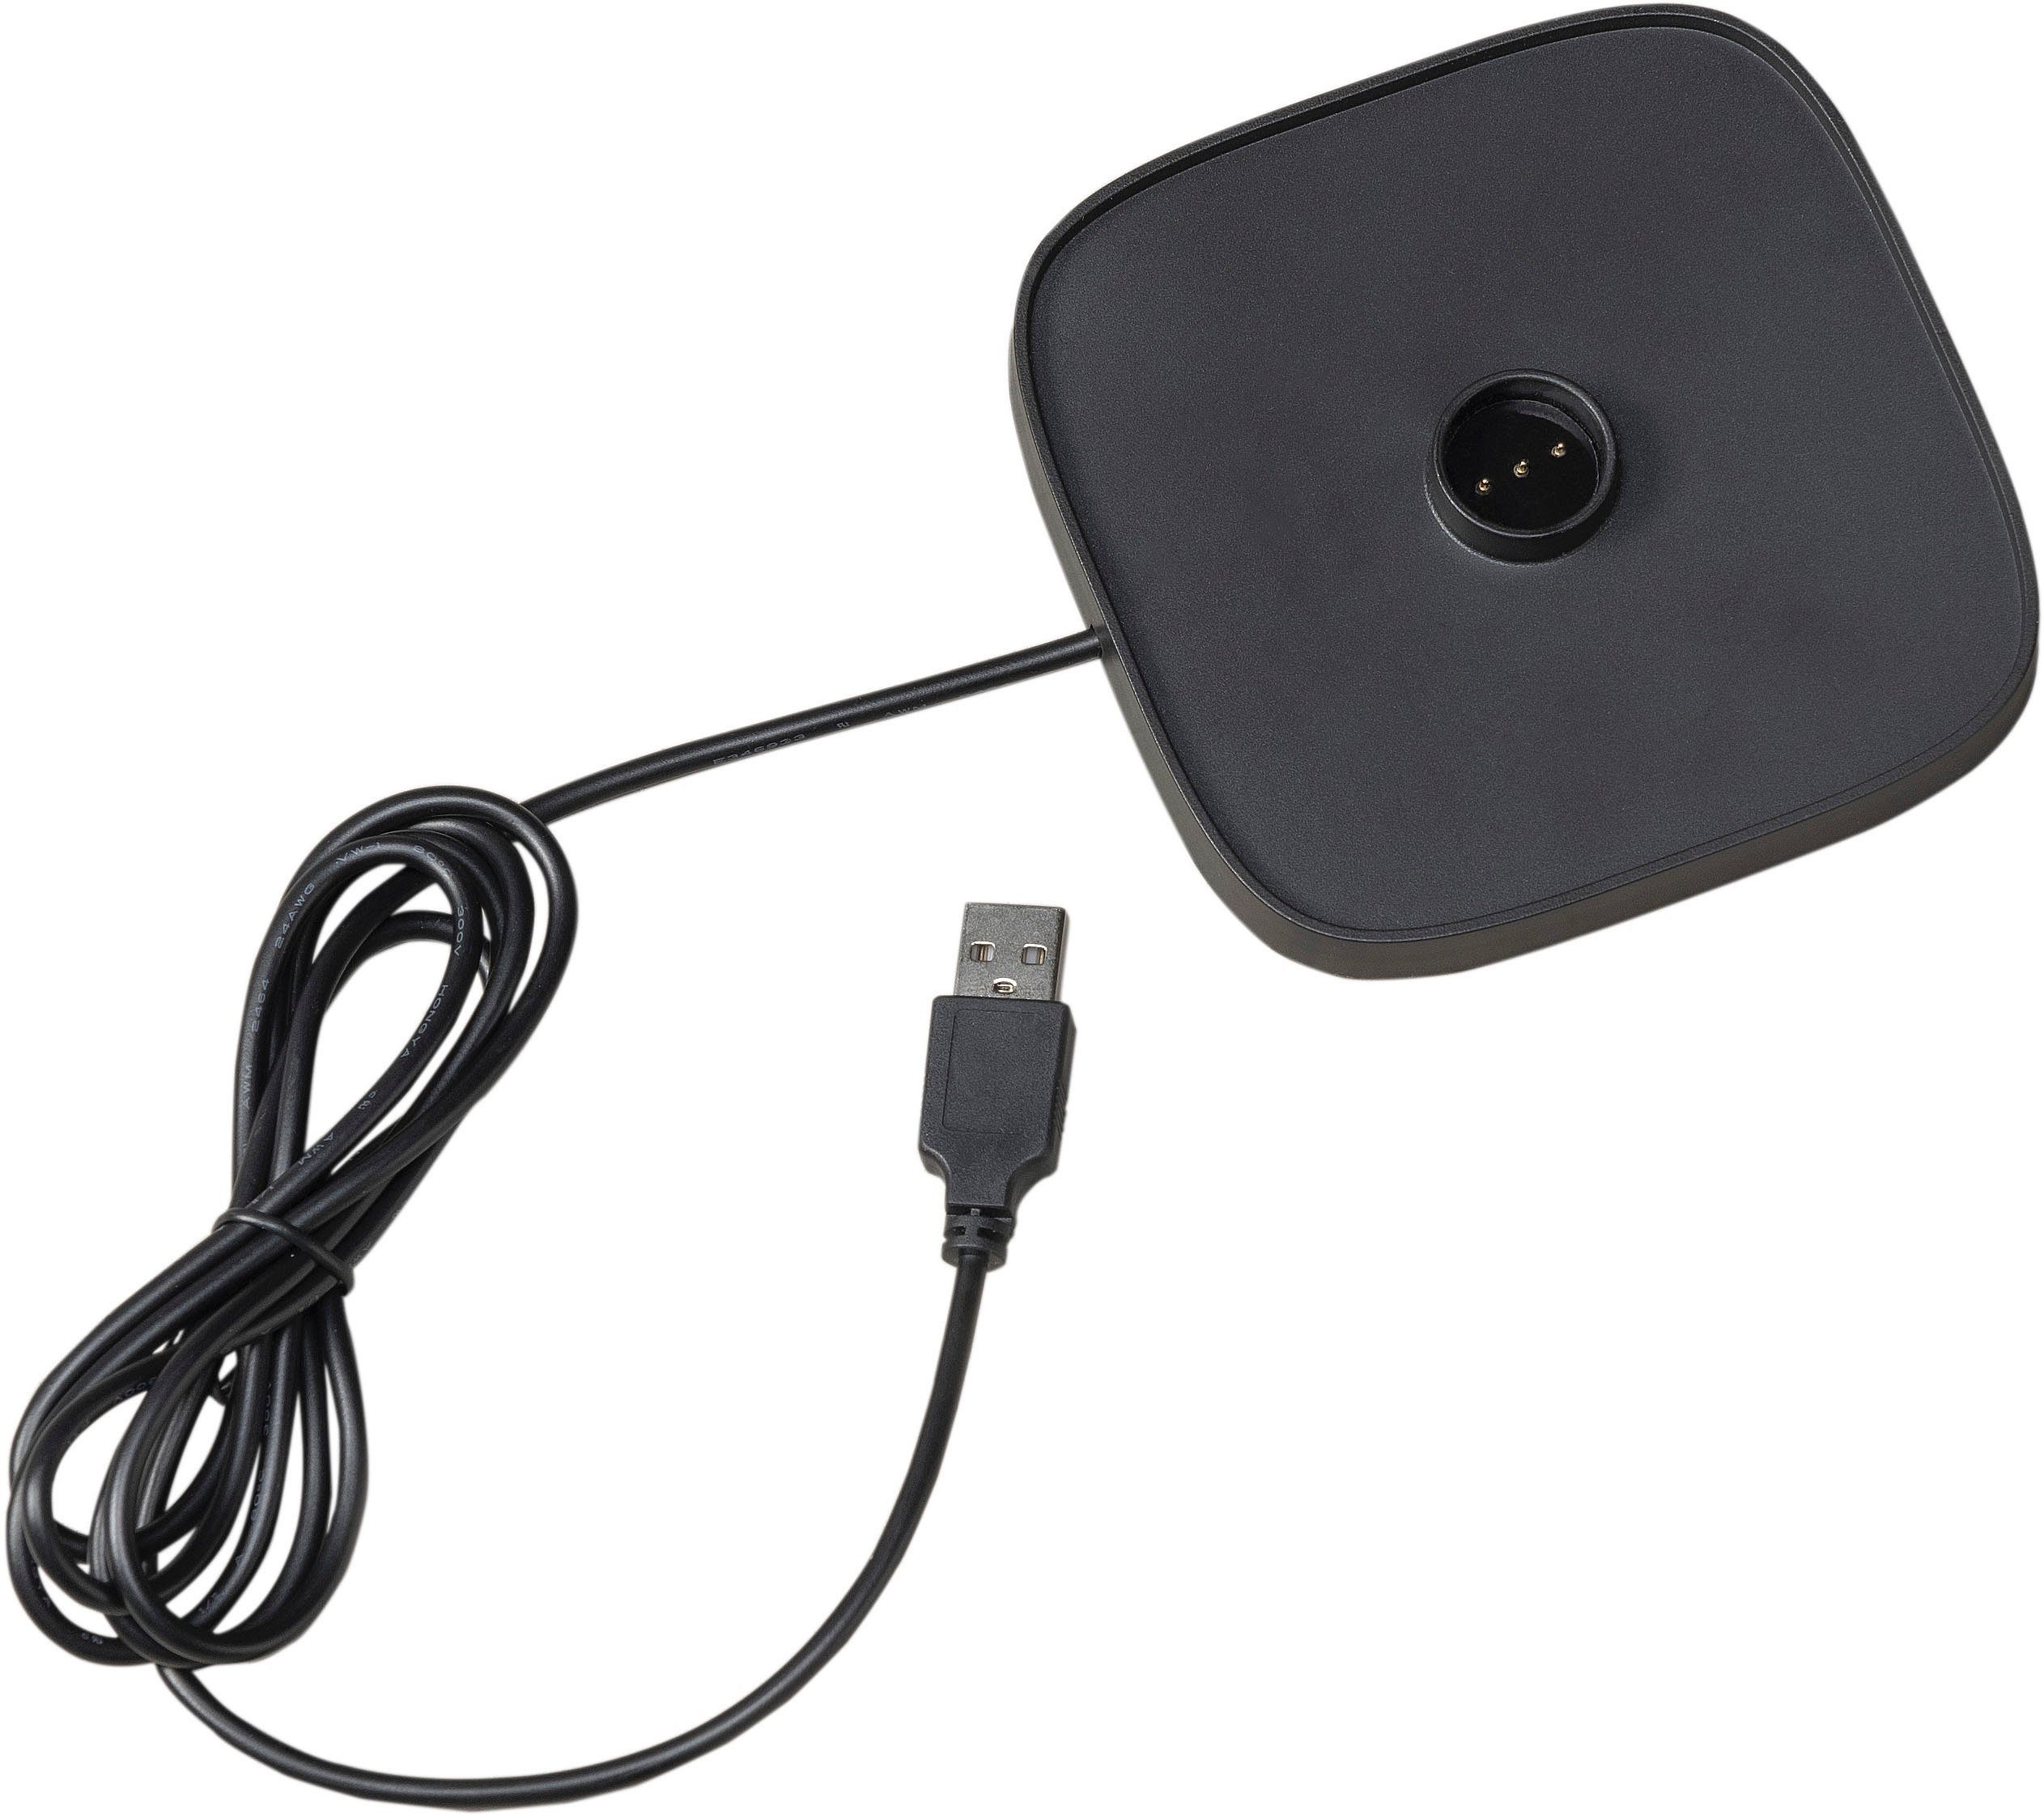 LED KONSTSMIDE fest Capri Warmweiß, USB-Tischleuchte Farbtemperatur, dimmba schwarz, Tischleuchte Capri, integriert, LED LED